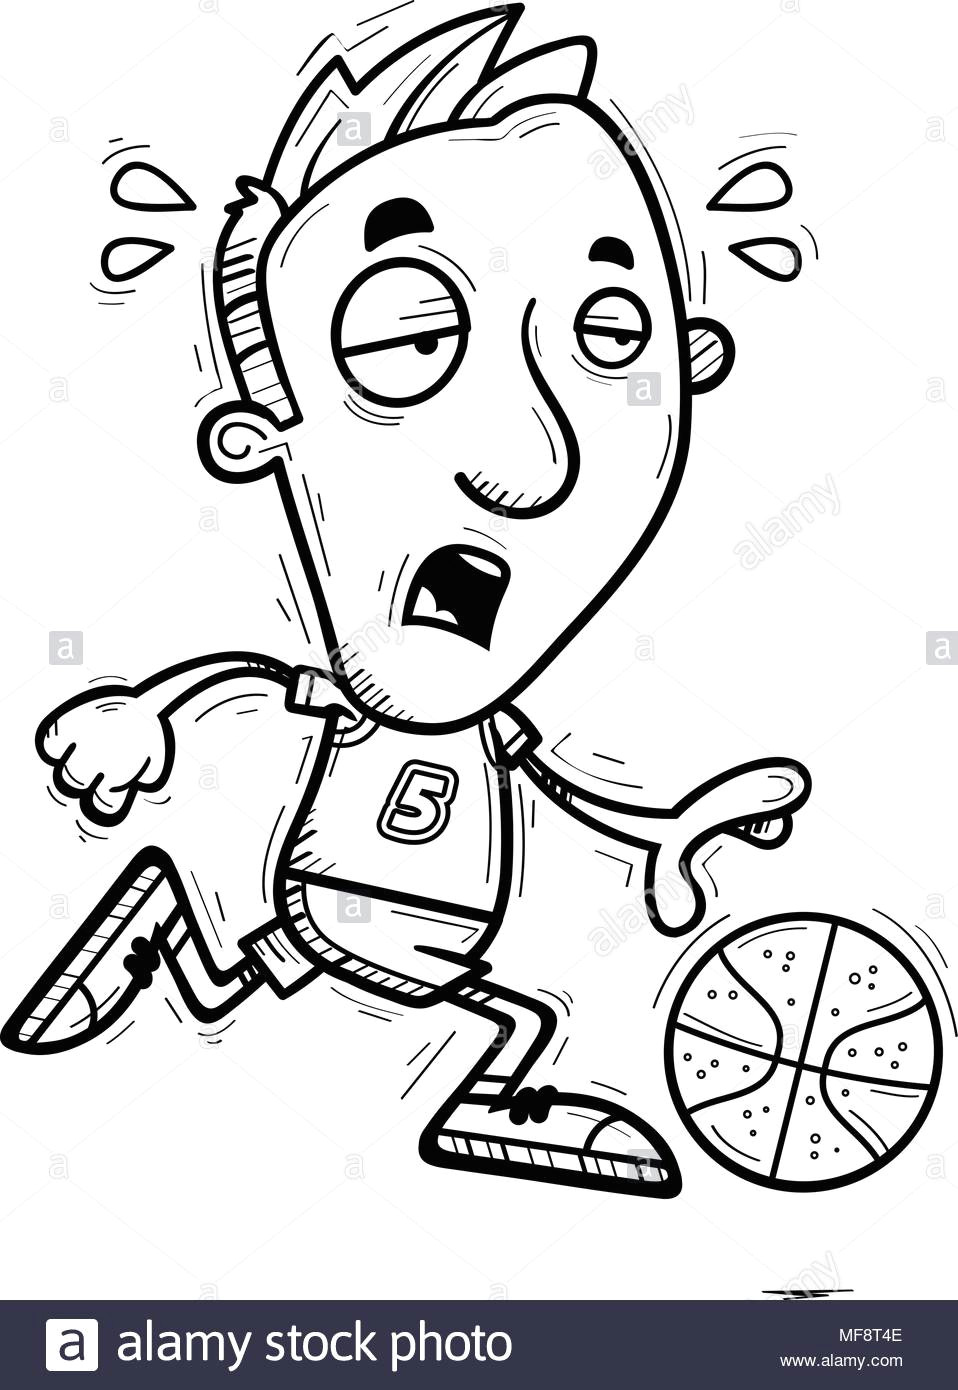 Cartoon Drawing Running Man A Cartoon Illustration Of A Man Basketball Player Running and